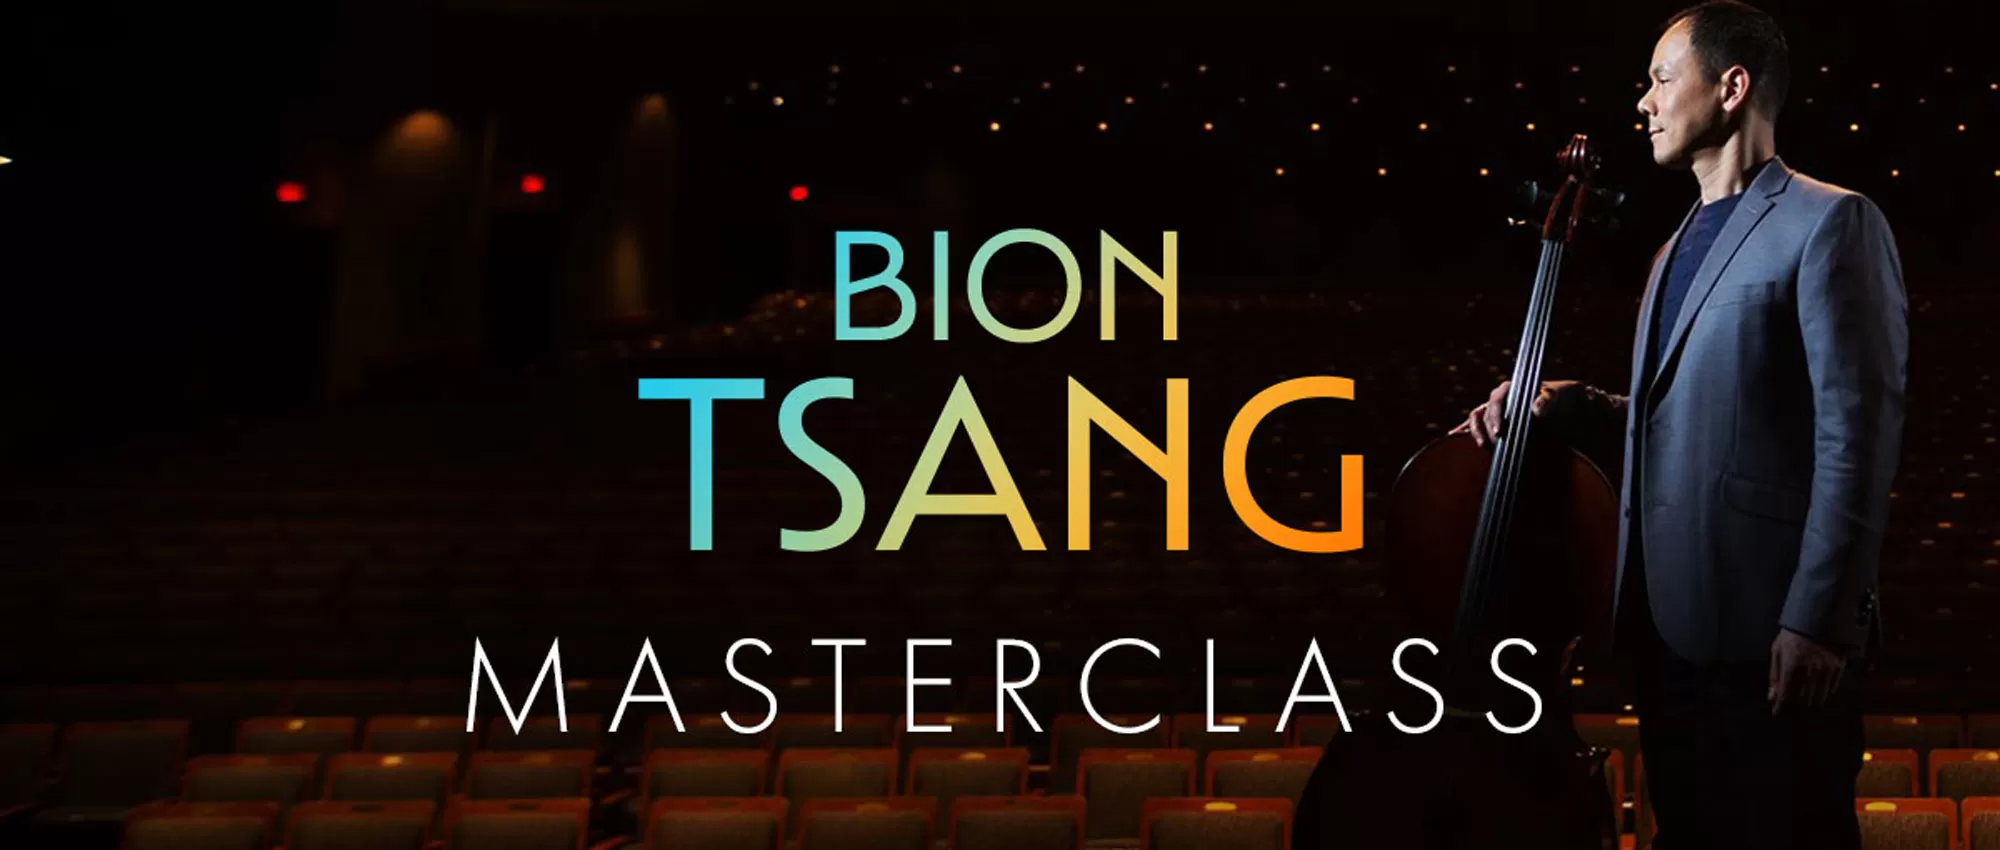 Free Cello Master Class with Bion Tsang